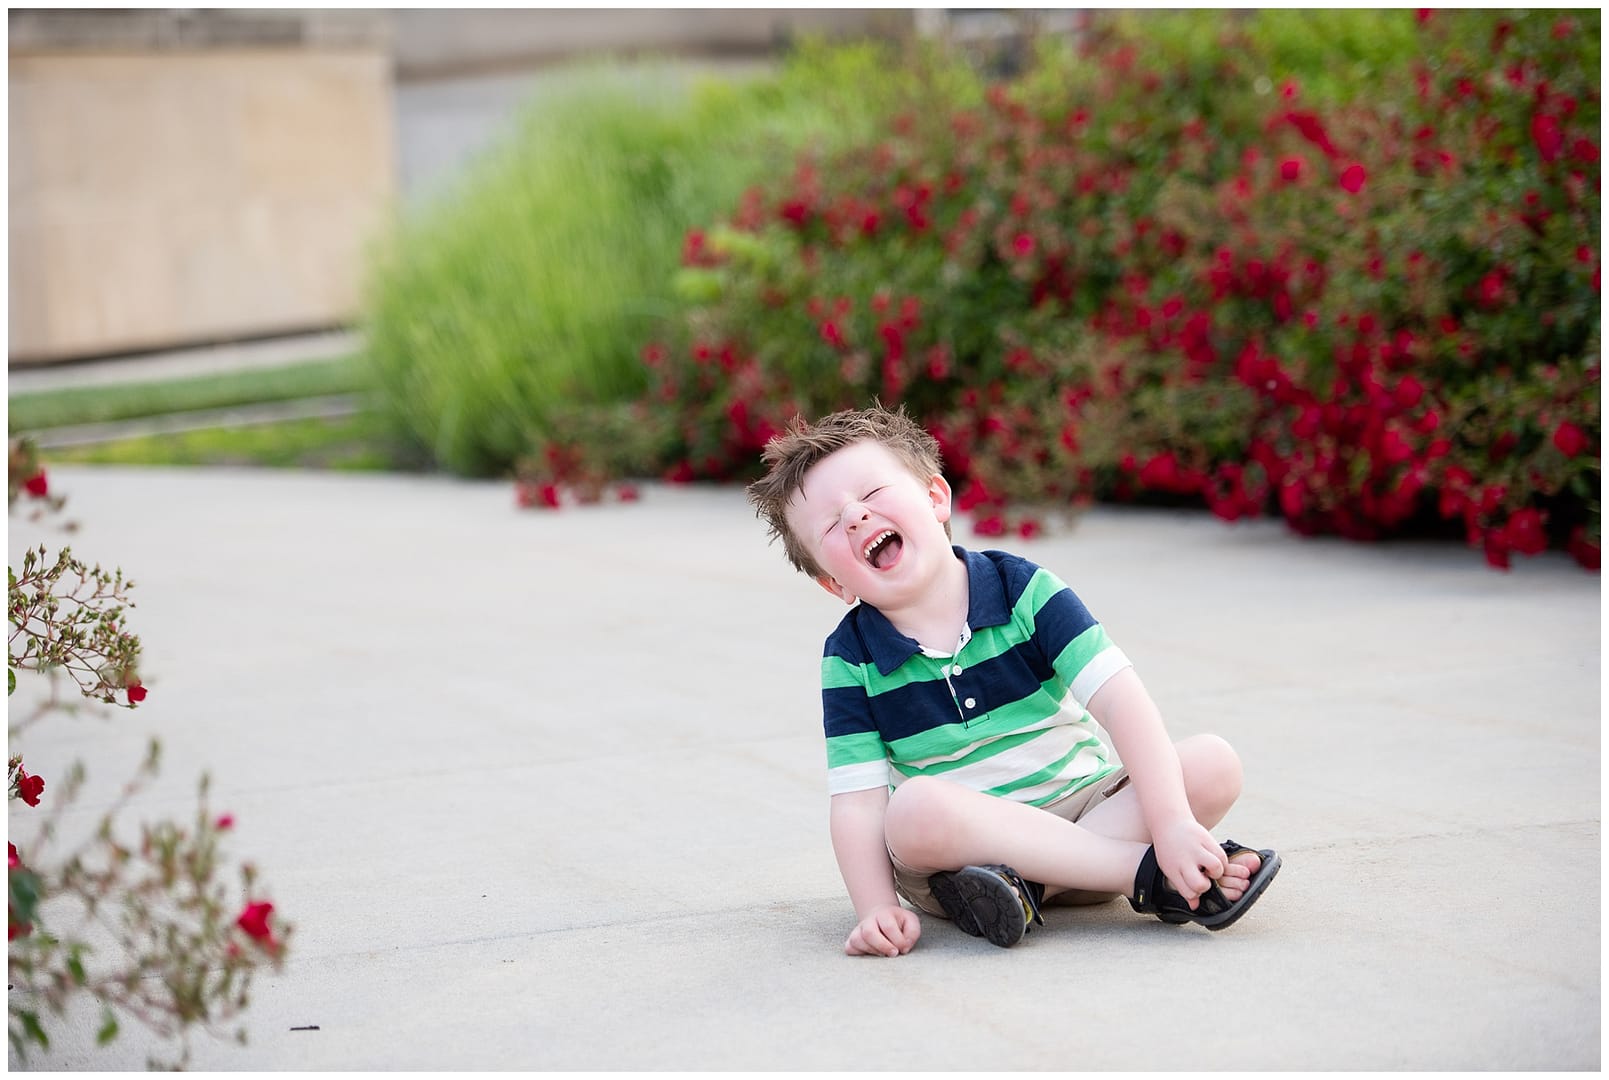 Boy laughs on sidewalk in Boise. Photos by Tiffany Hix Photography.